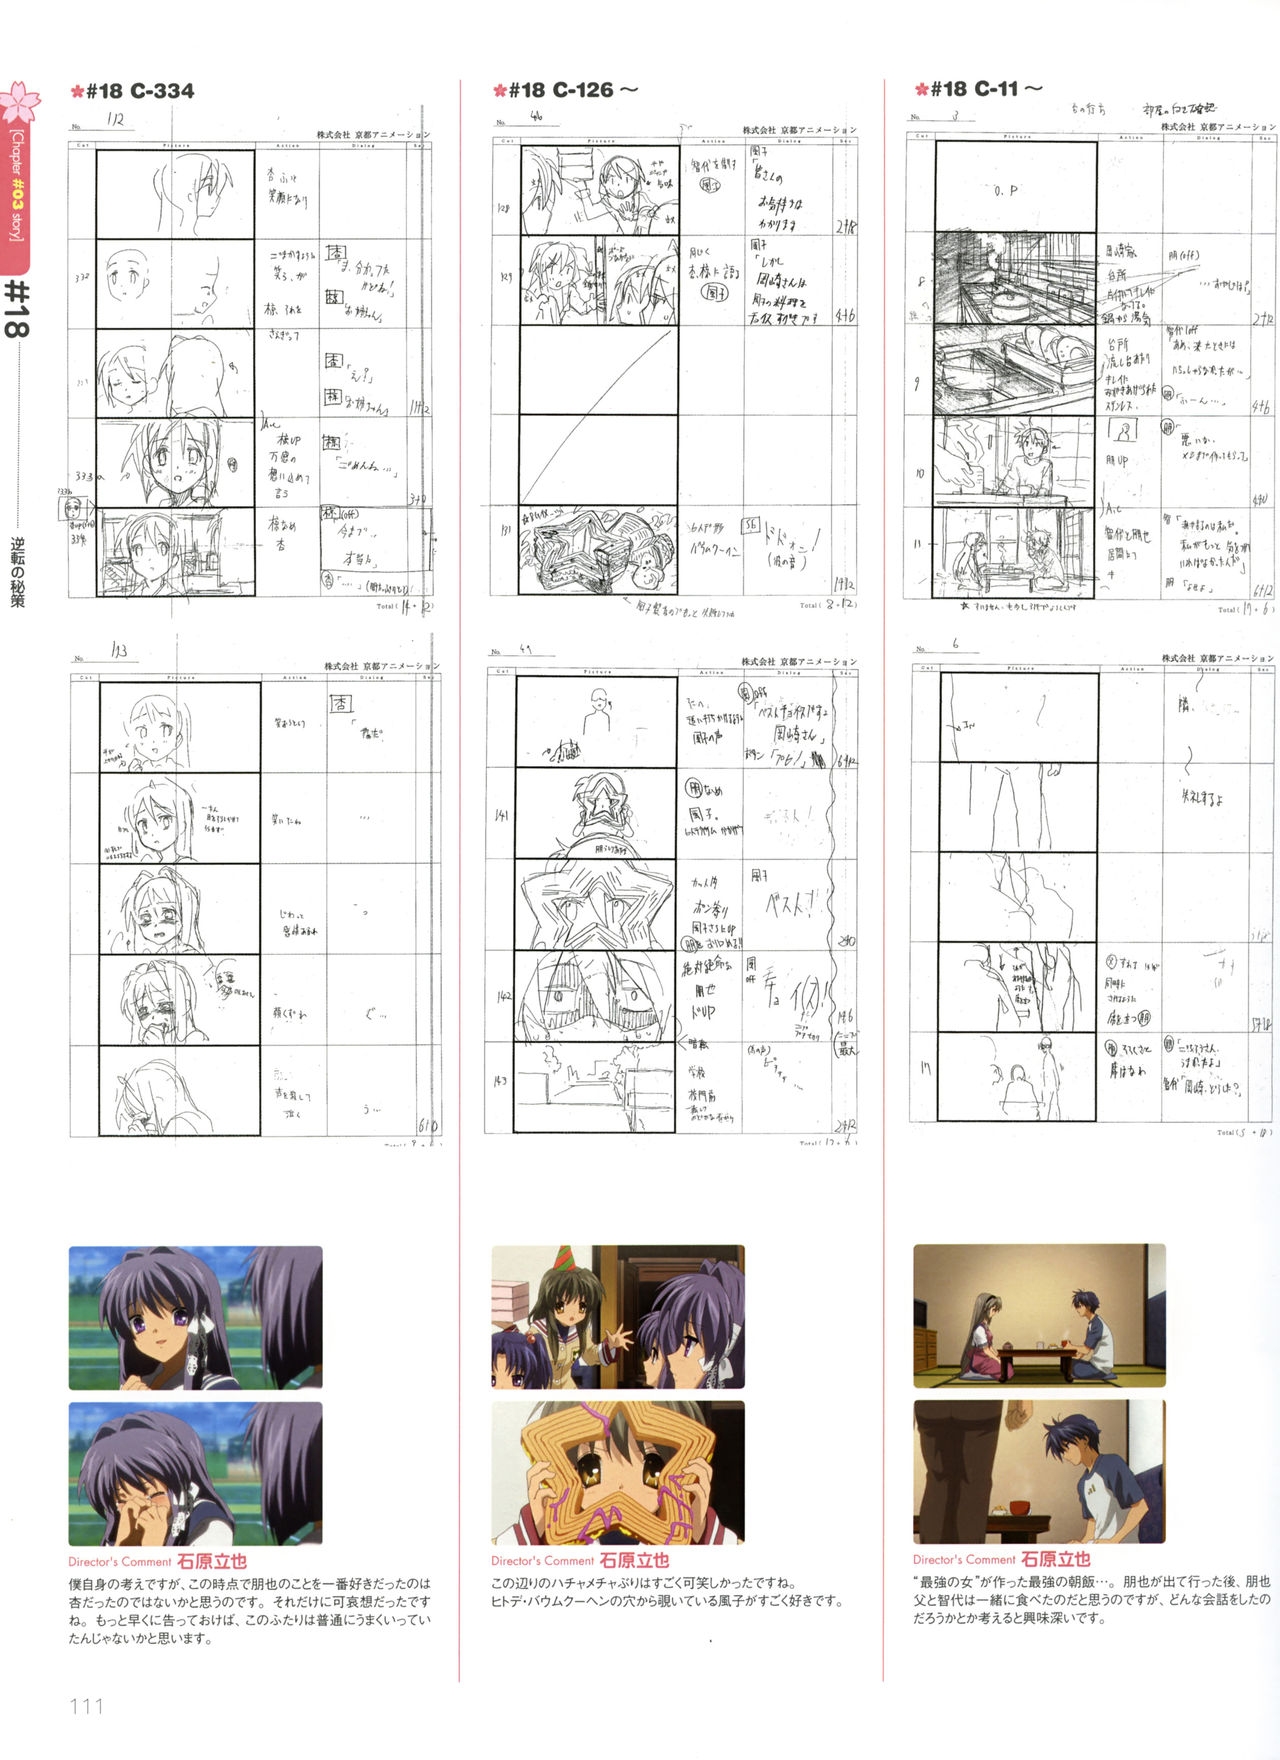 Clannad TV Animation Visual Fan Book 114